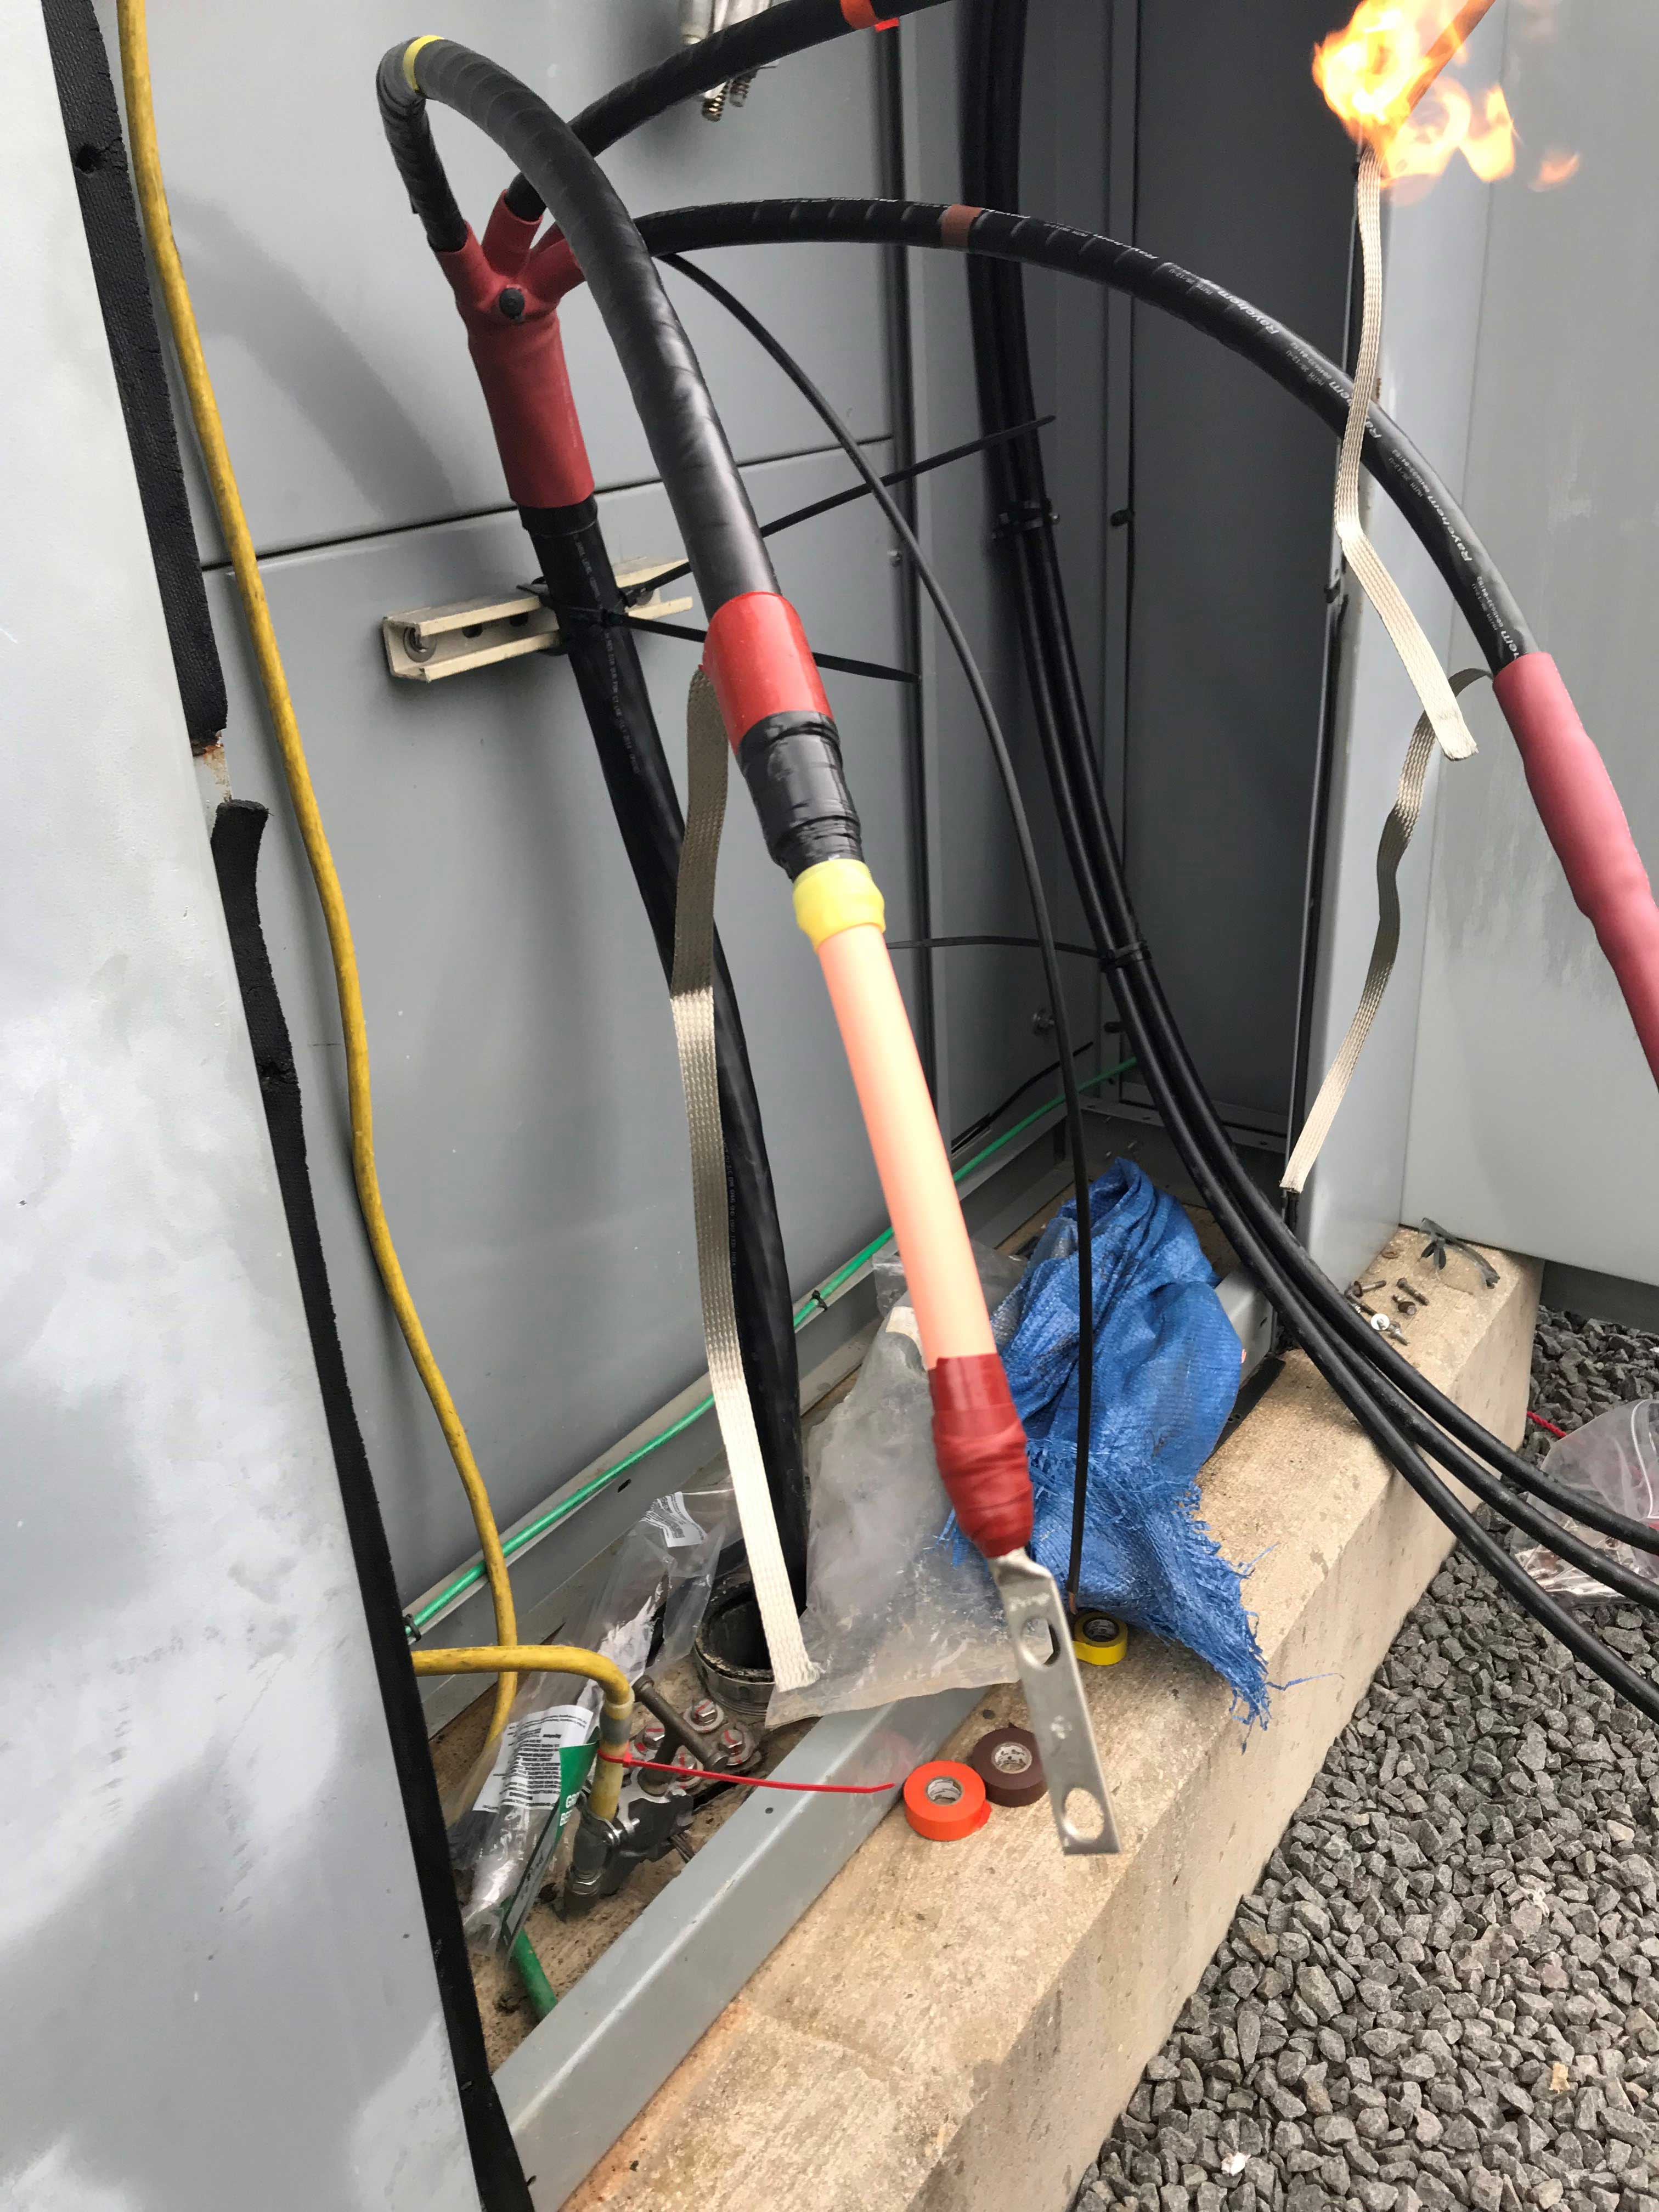 MV cable splice ready for heatshrink tube